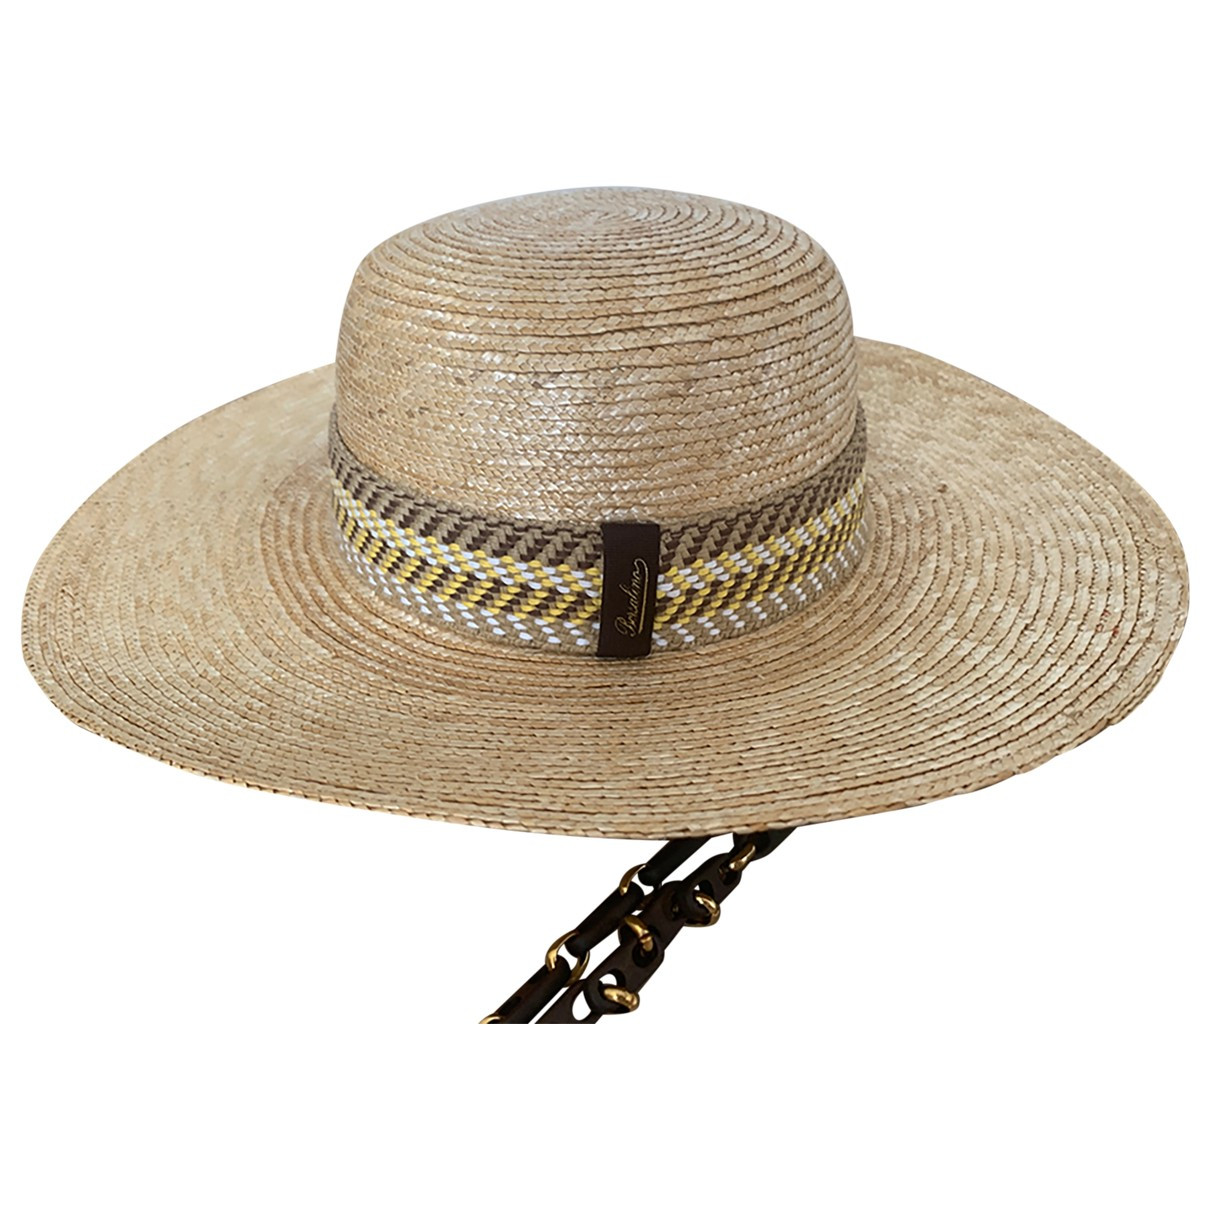 accessories Borsalino hats for Female Wicker M International. Used condition